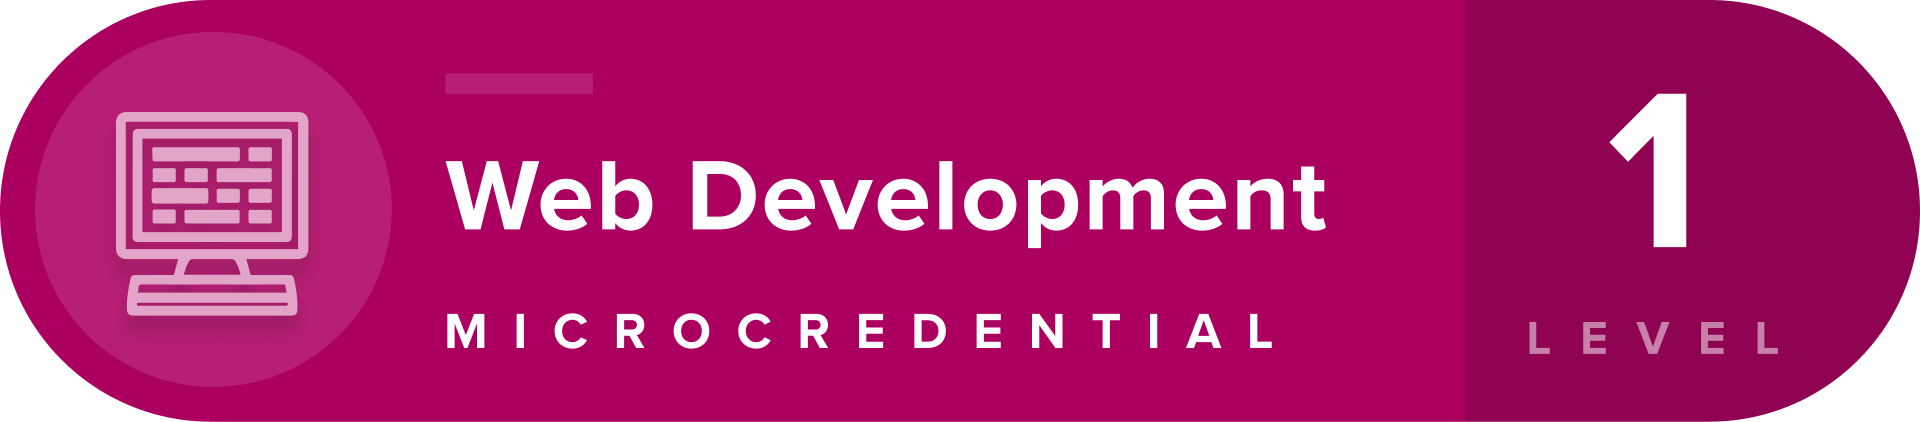 Web Development microcredentials level 1 badge